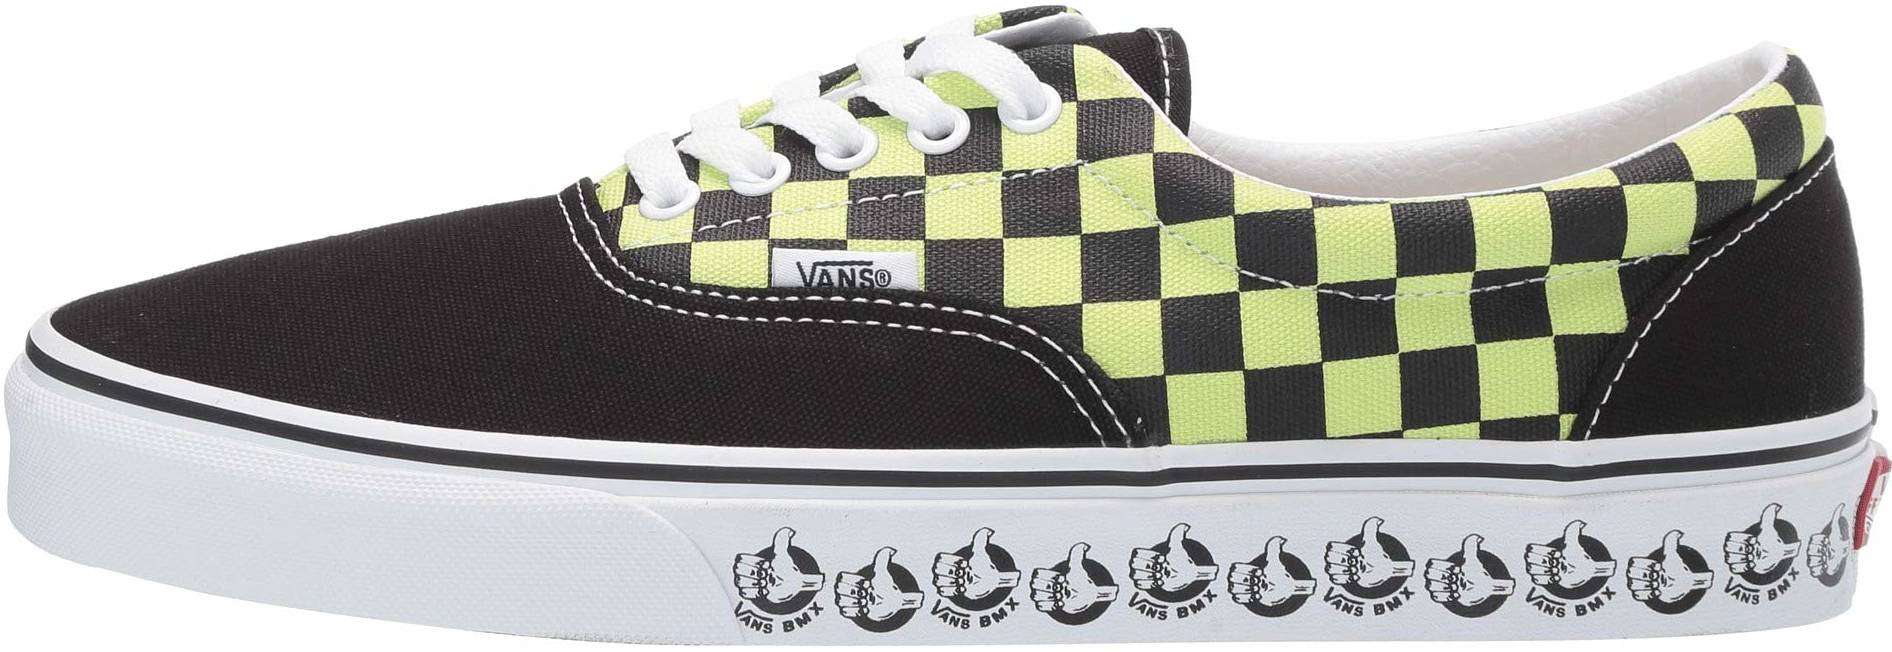 Details about   Vans Mens Era Low Top Skate Shoes  NEW NWOB  Multiple Sizes